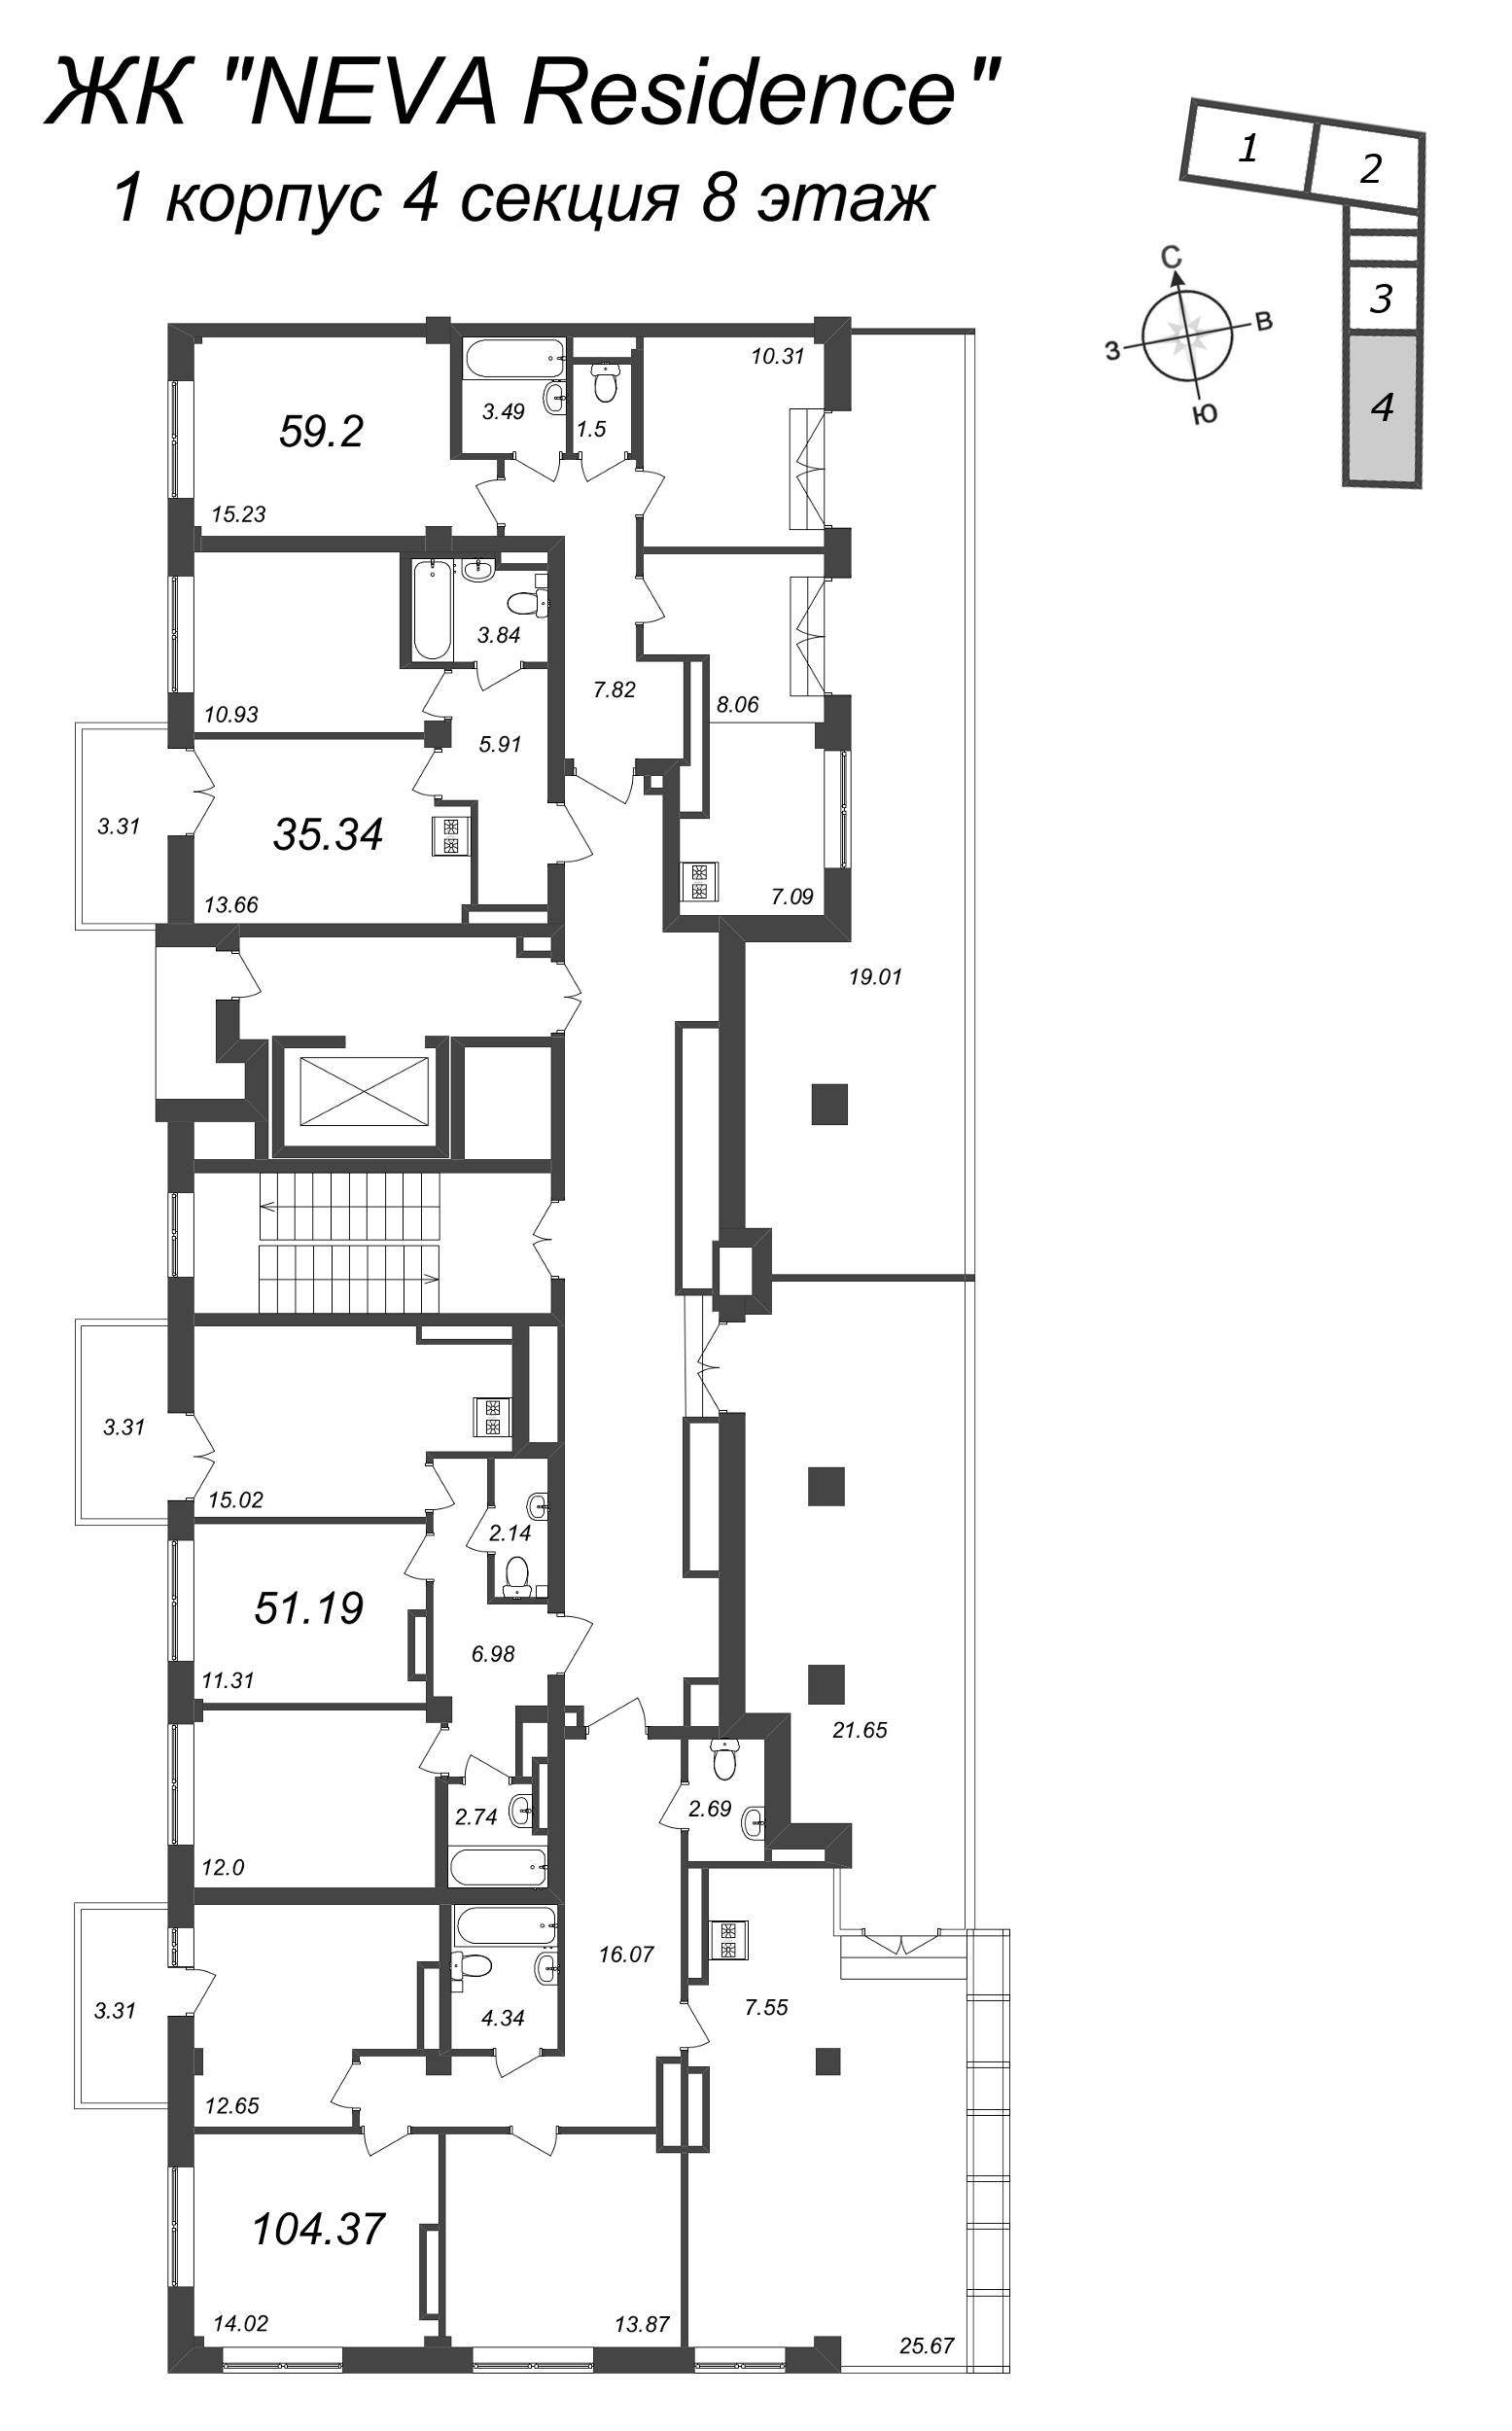 3-комнатная (Евро) квартира, 51.19 м² - планировка этажа